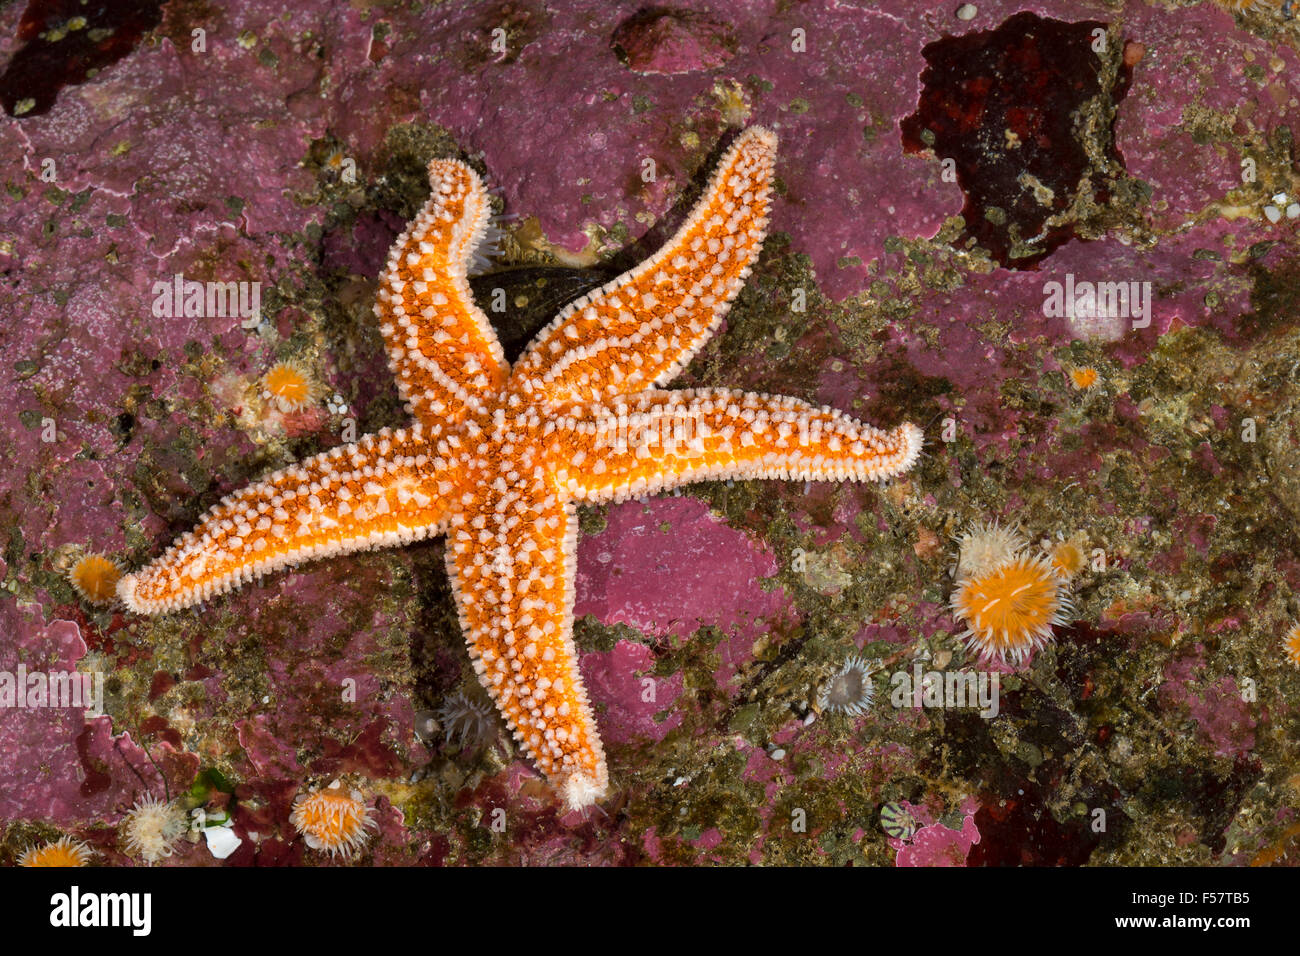 Common starfish, common sea star, starfish, Gemeiner Seestern, Asterias rubens, sea-star, L'Étoile de mer Stock Photo